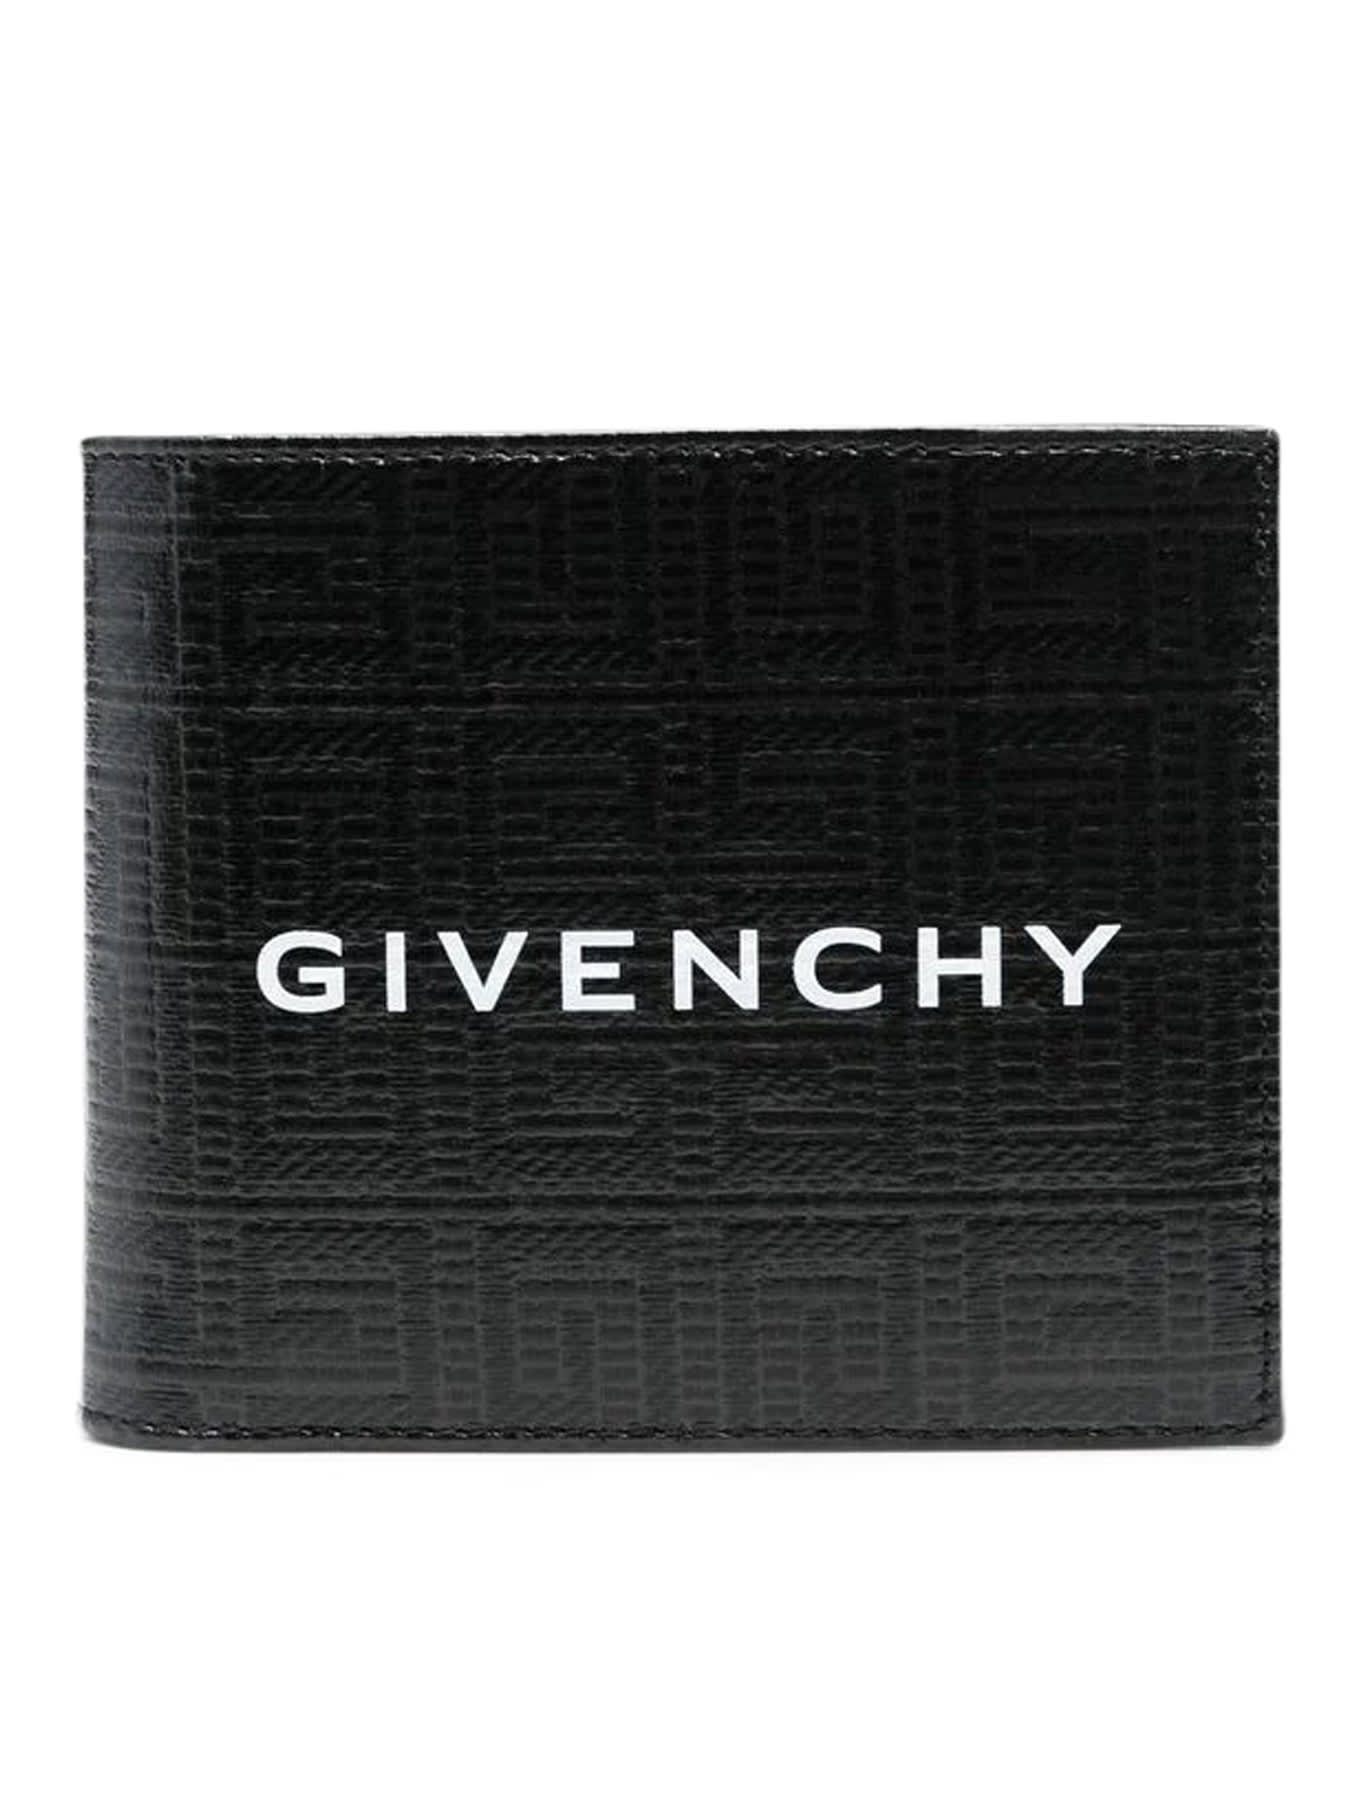 Givenchy 8cc Billfold Wallet